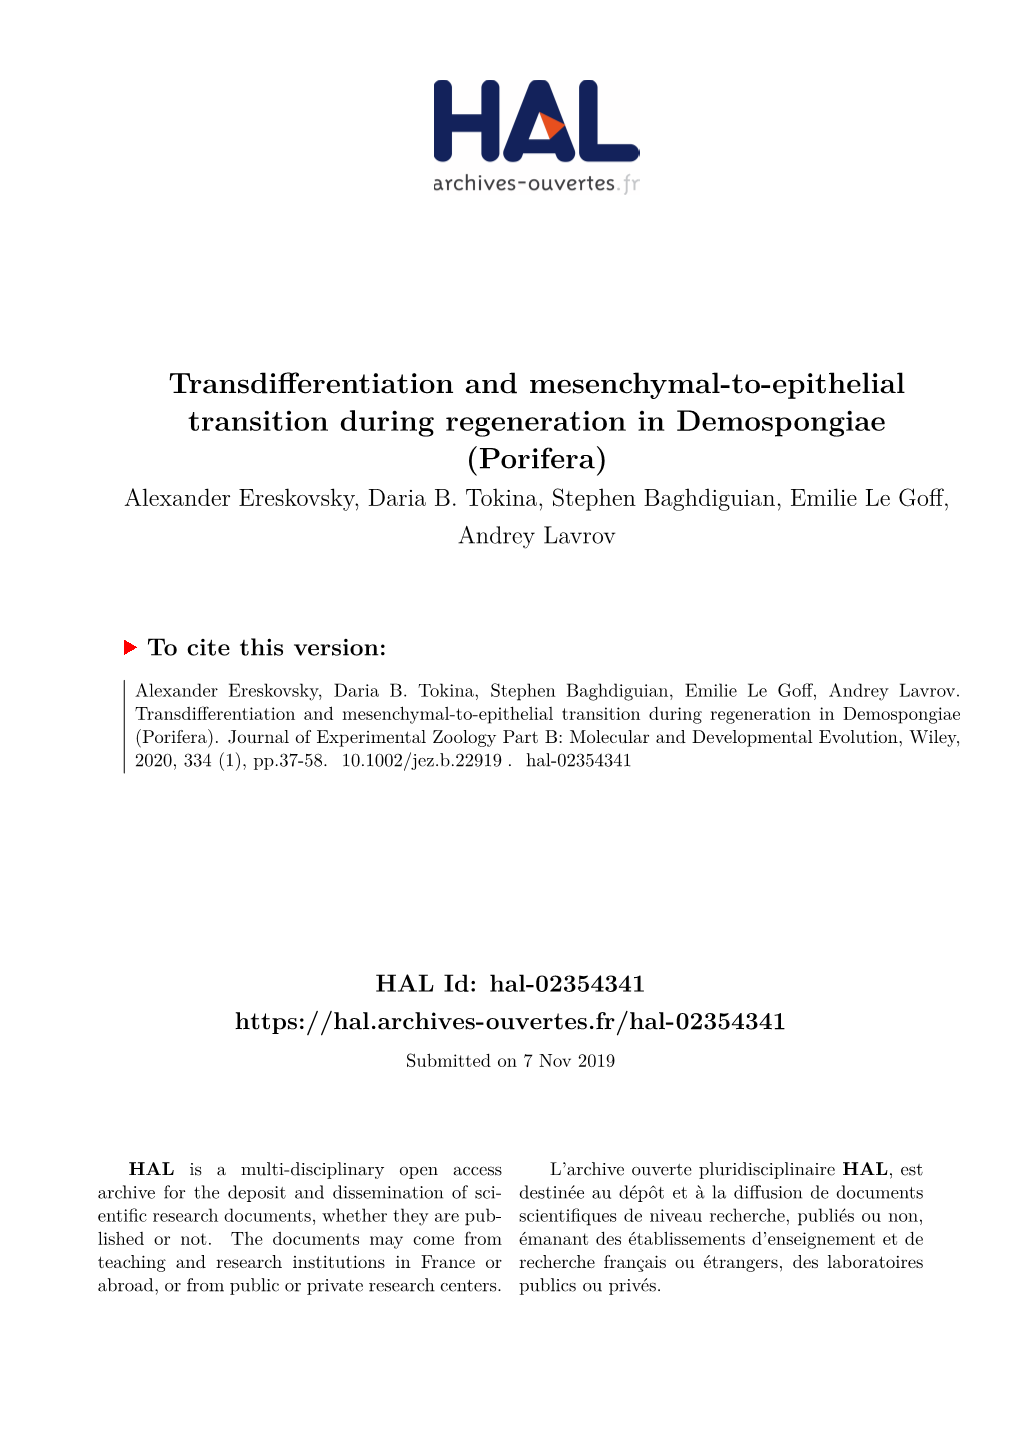 Transdifferentiation and Mesenchymal-To-Epithelial Transition During Regeneration in Demospongiae (Porifera) Alexander Ereskovsky, Daria B